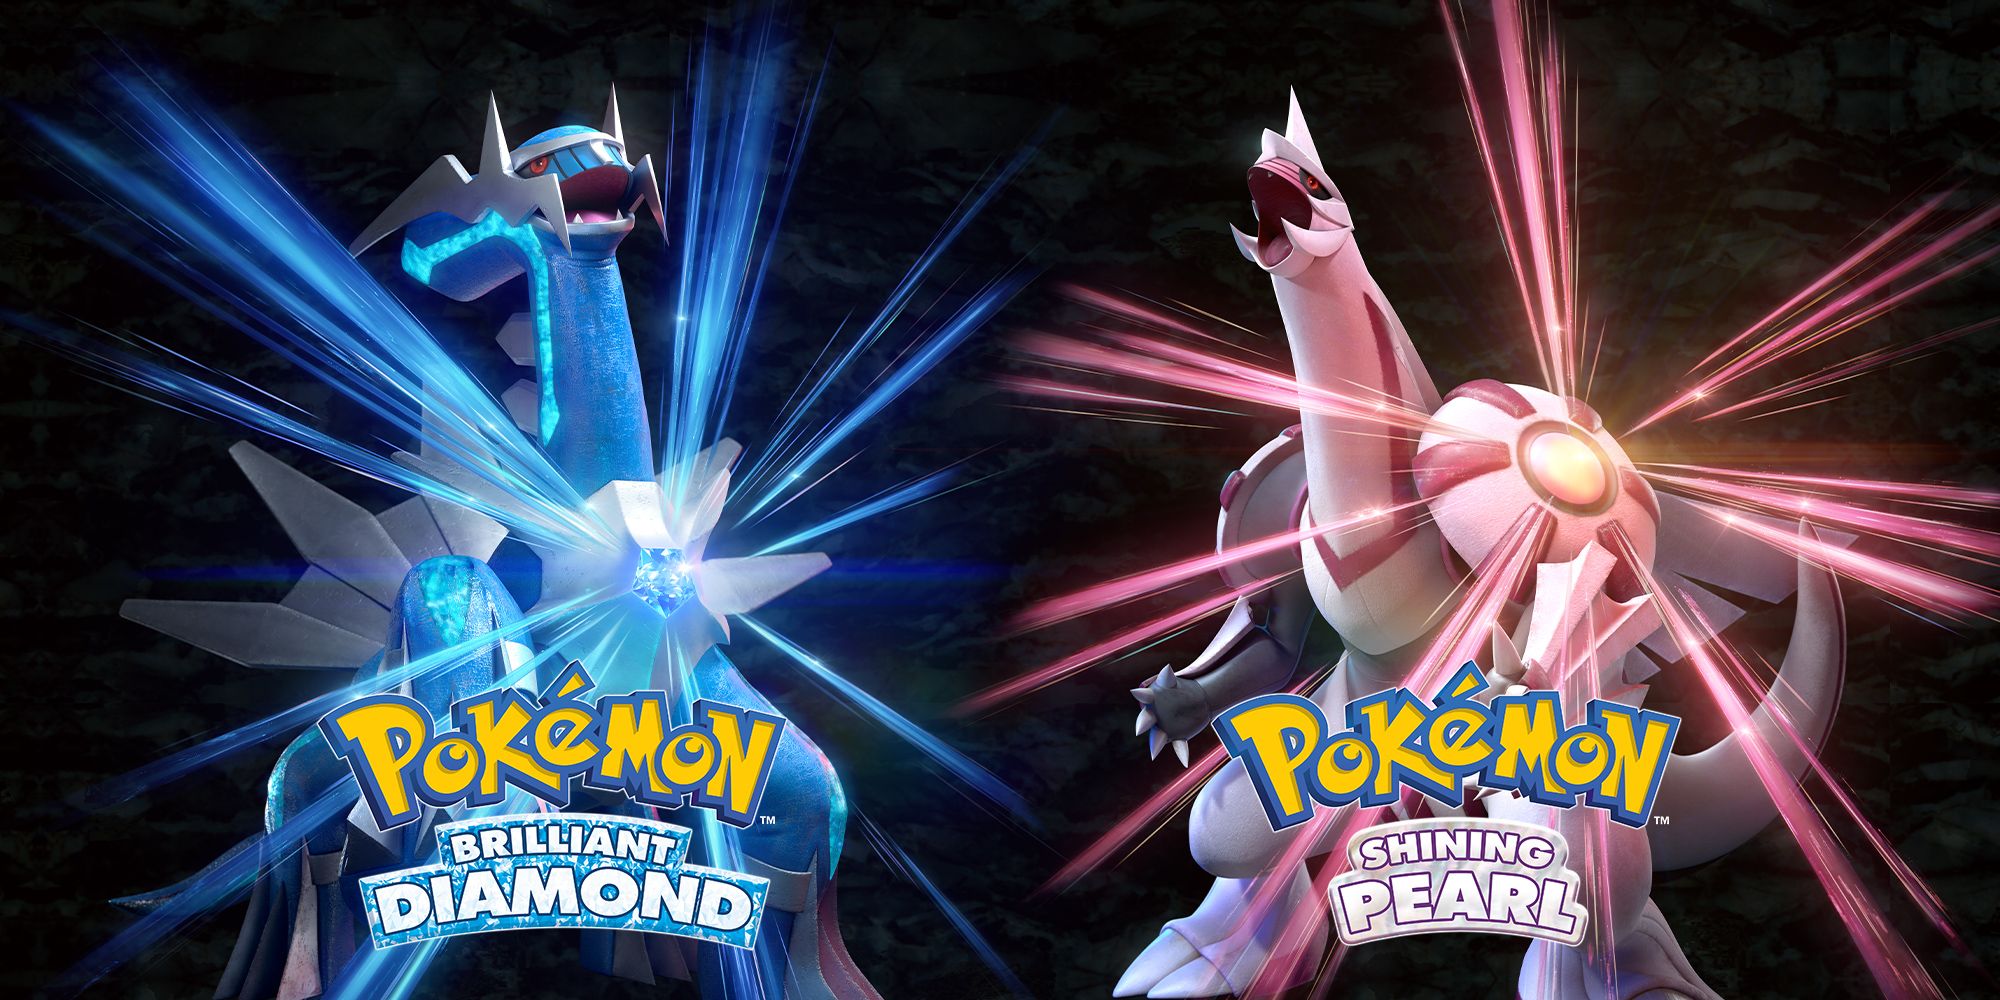 Key art for Pokémon Brilliant Diamond and Shining Pearl featuring Dialga and Palkia.